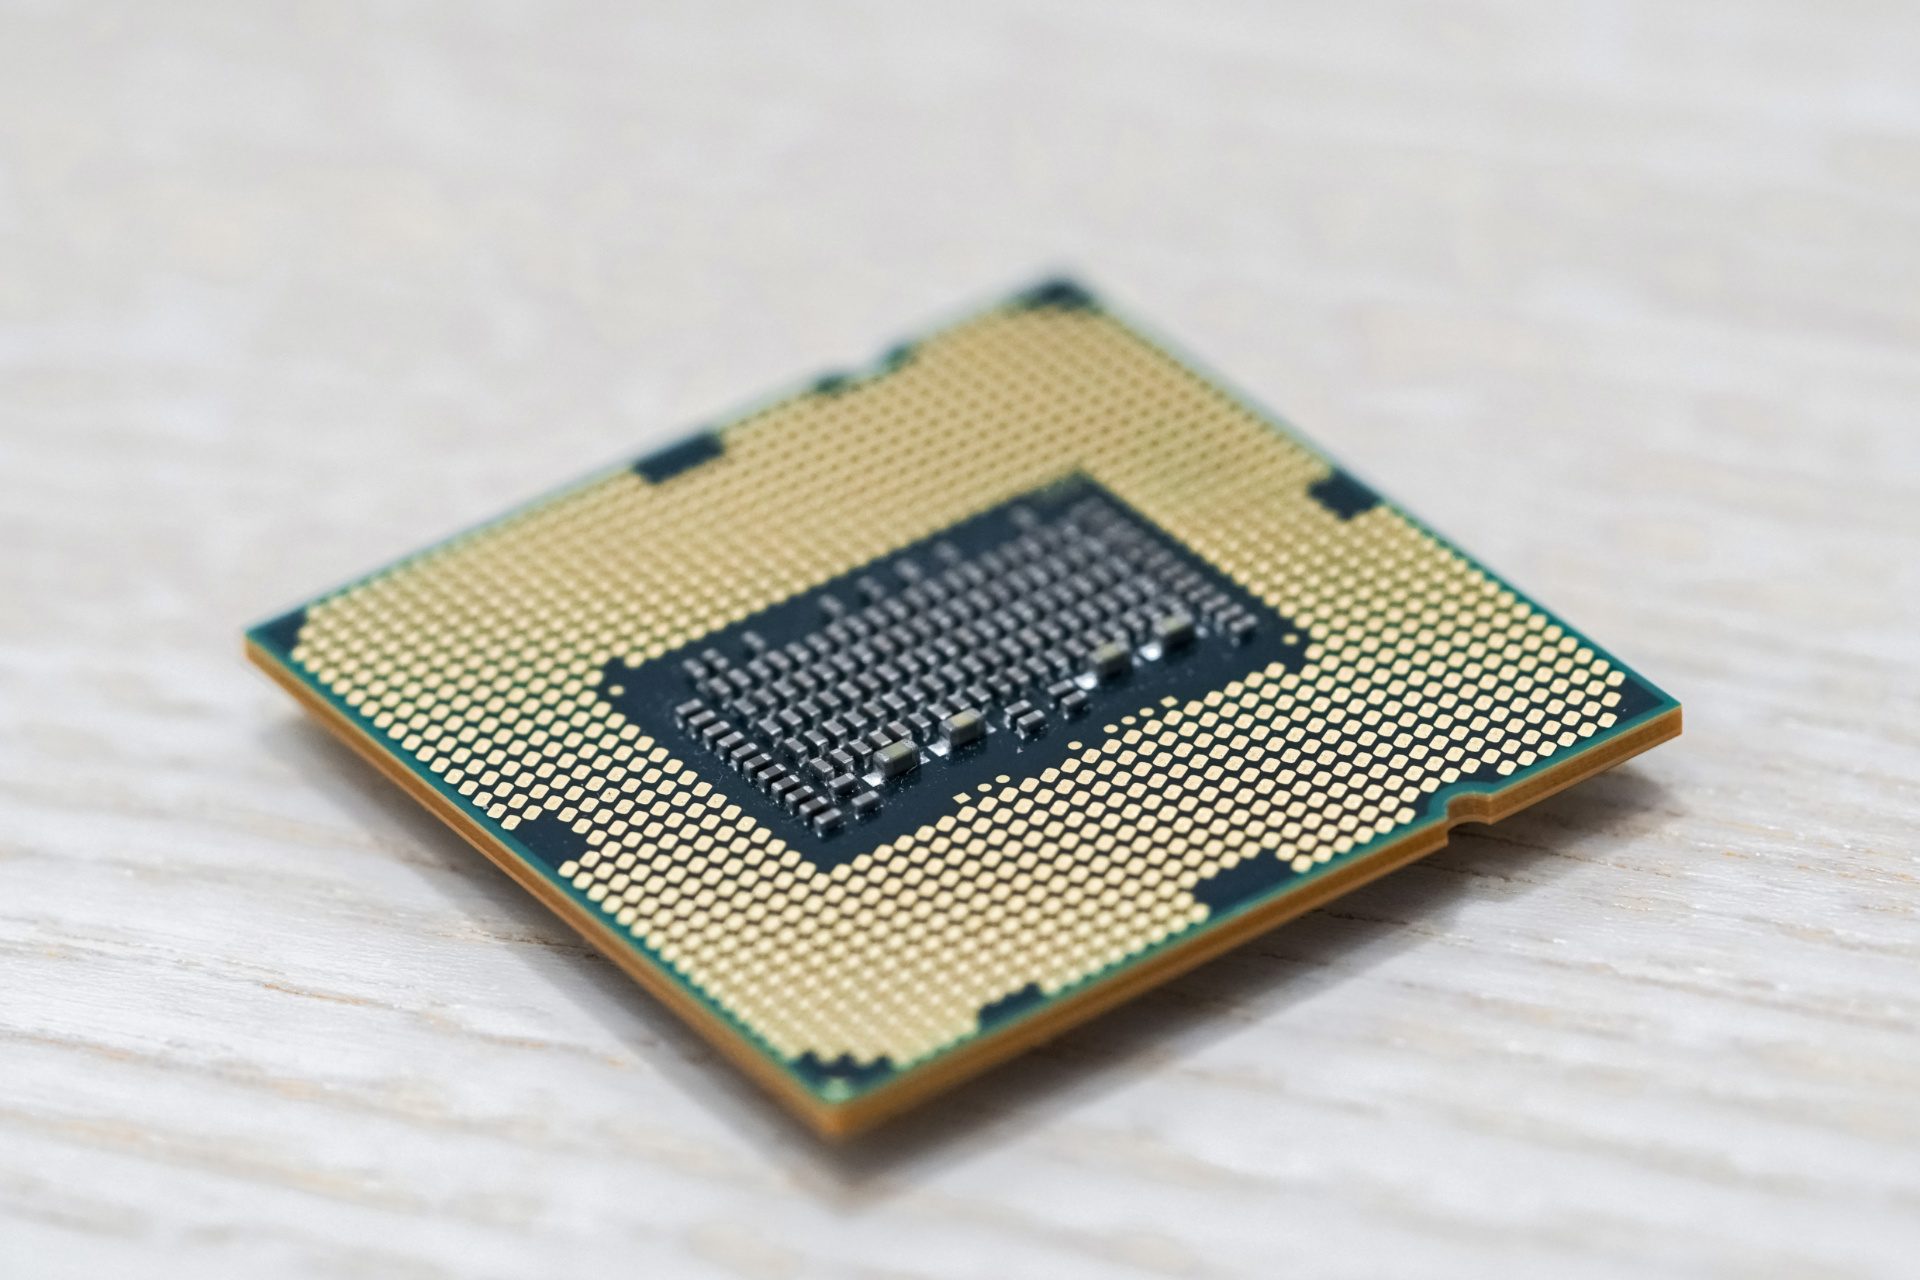 chip cip cipset chipset procesor jeremy bezanger unsplash